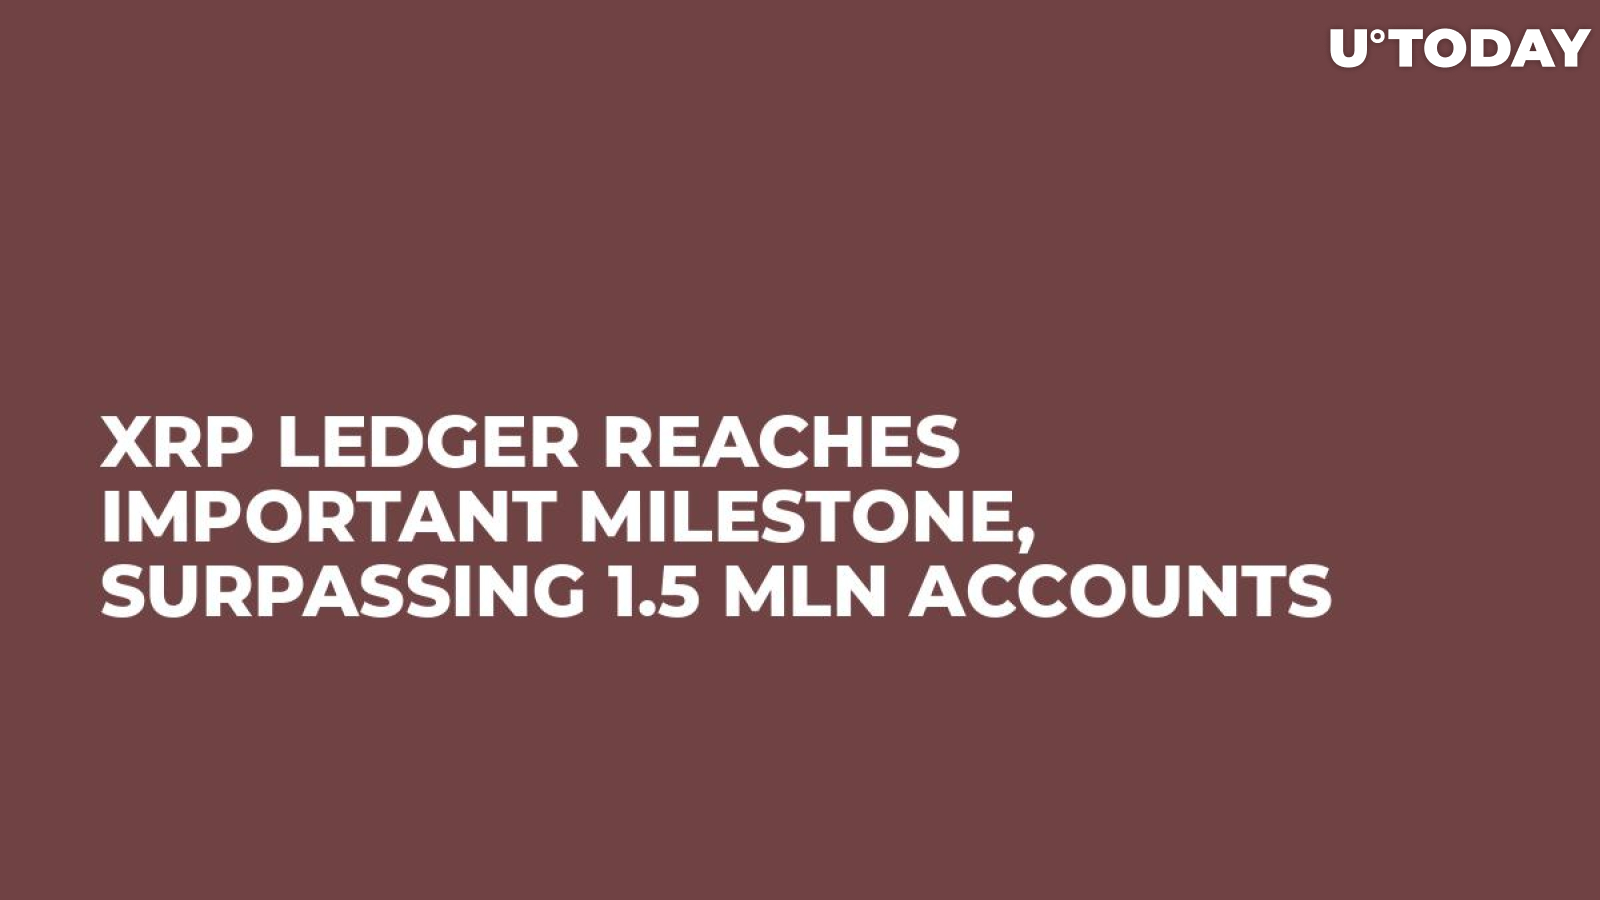 XRP Ledger Reaches Important Milestone, Surpassing 1.5 Mln Accounts